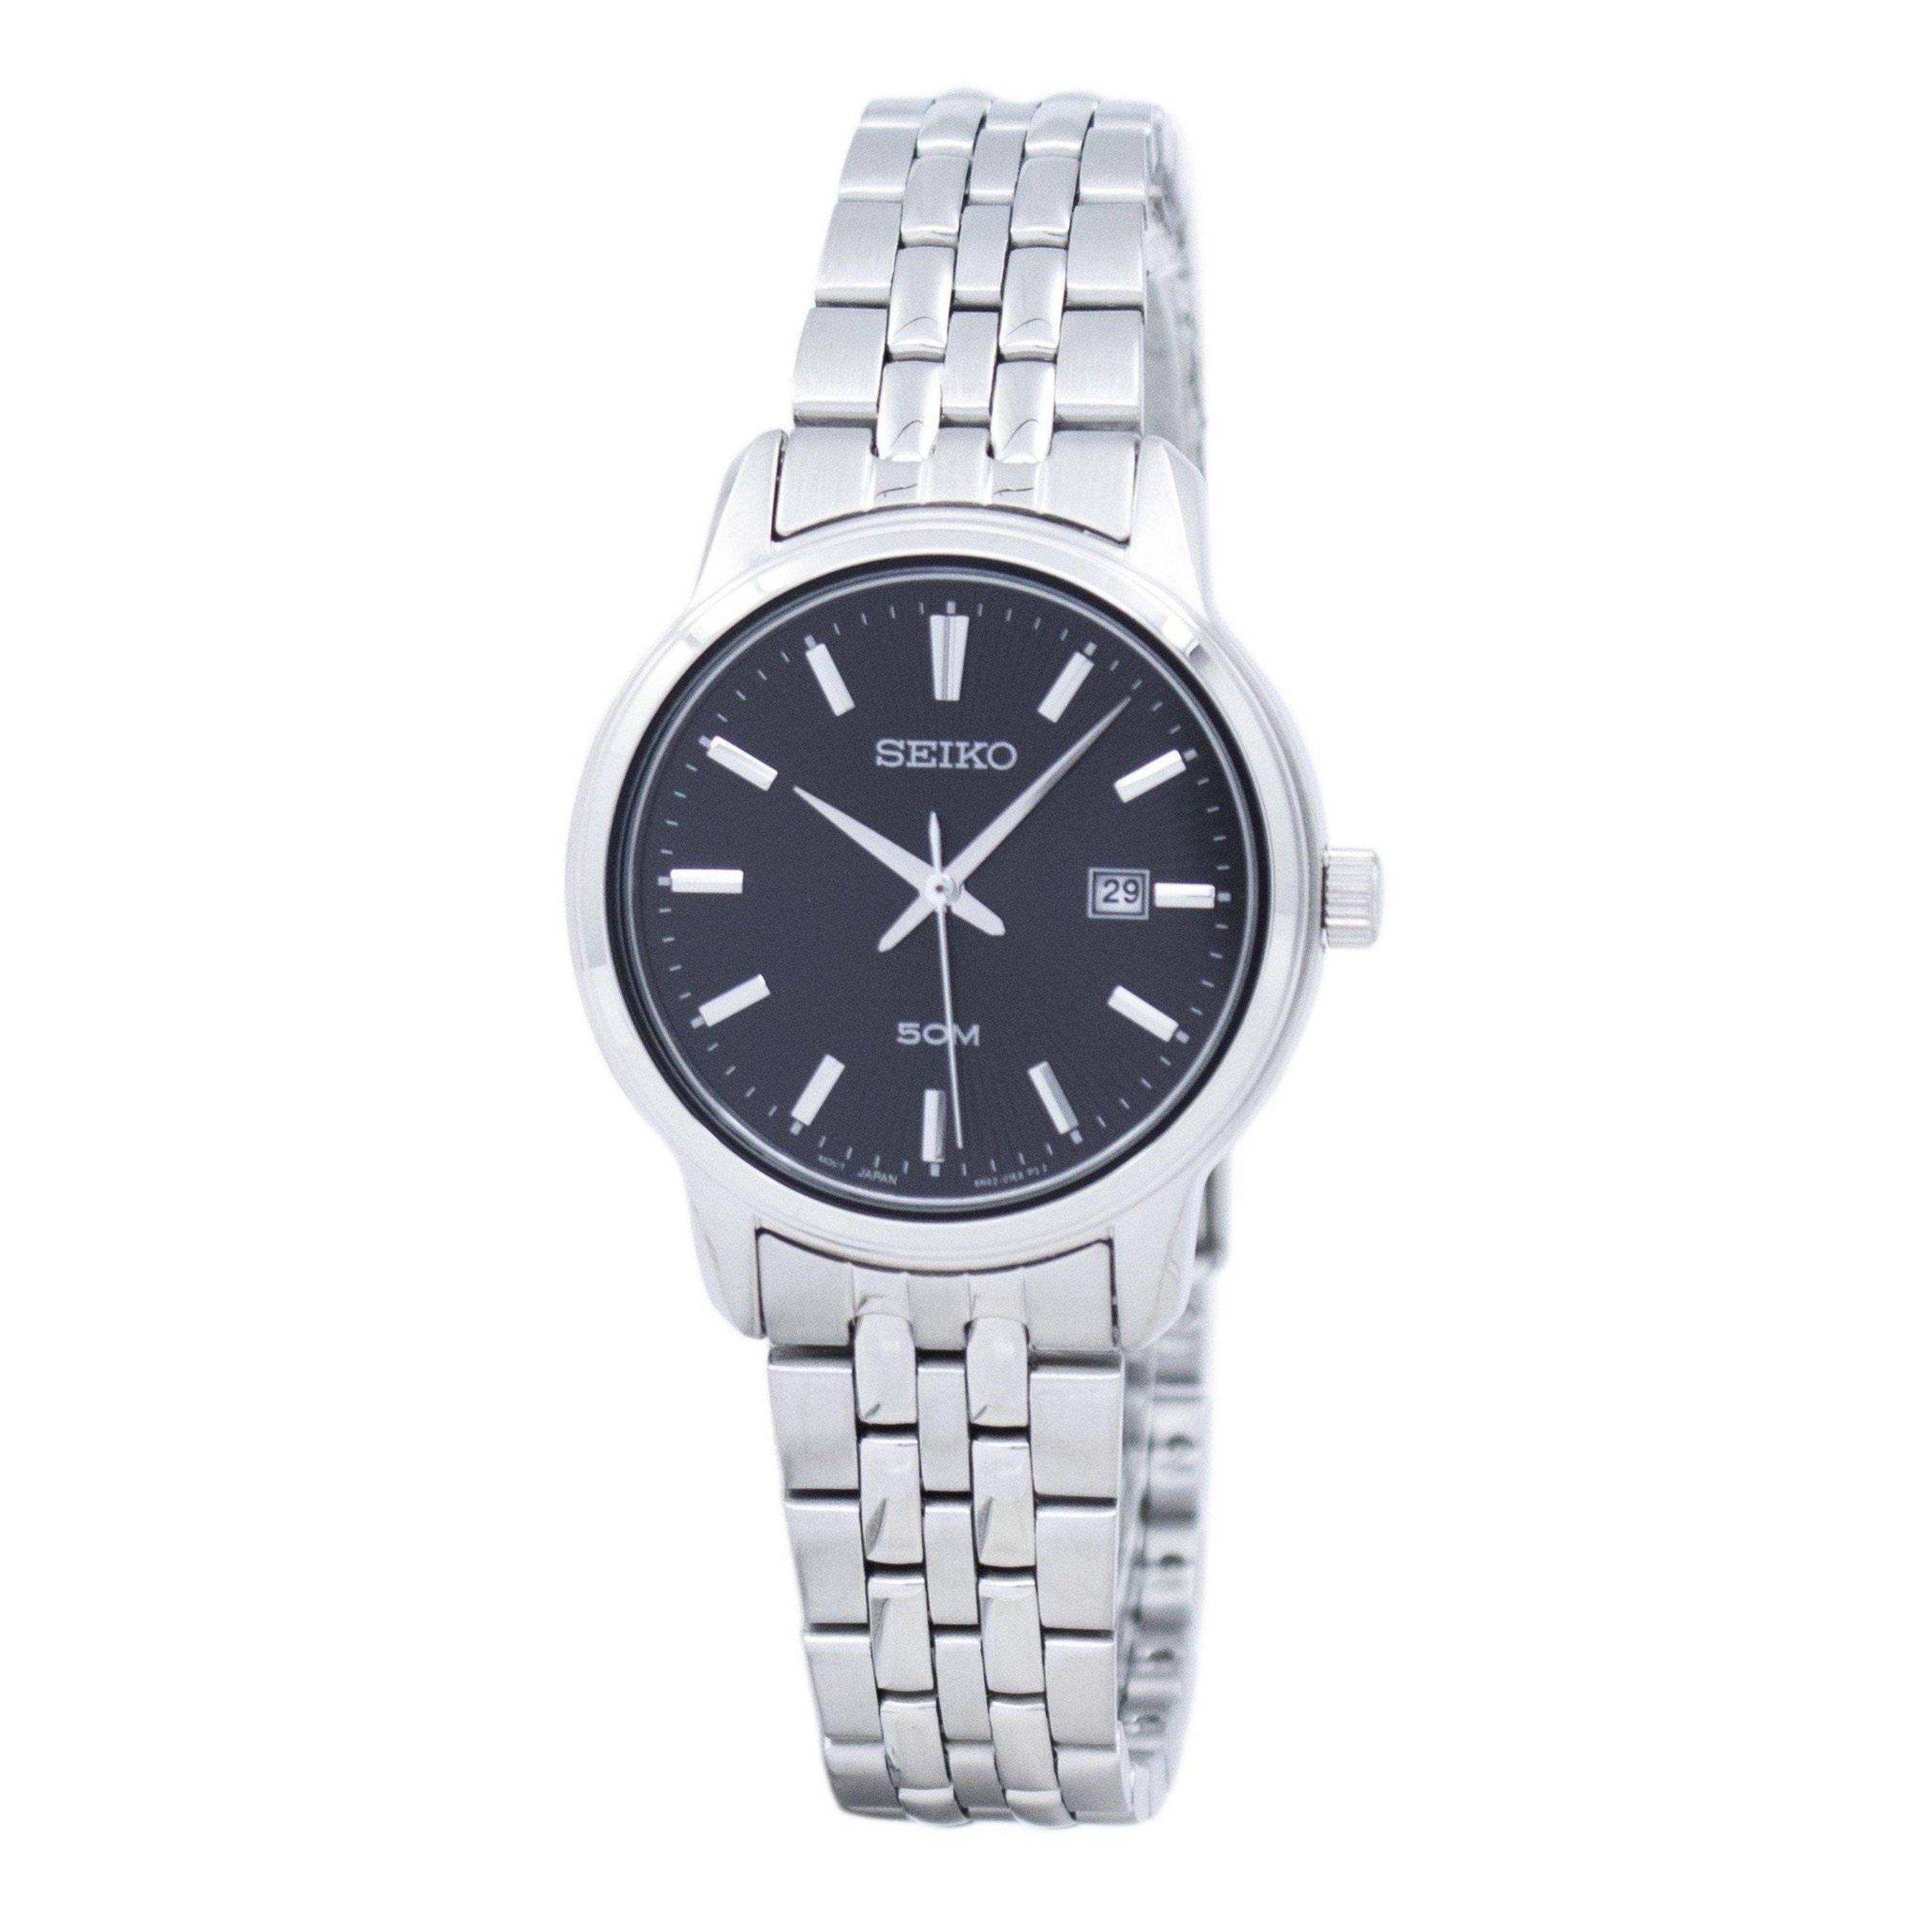 Buy Seiko regular ladies watch, analog, 30mm, stainless steel strap, sur663p1 – silver in Kuwait